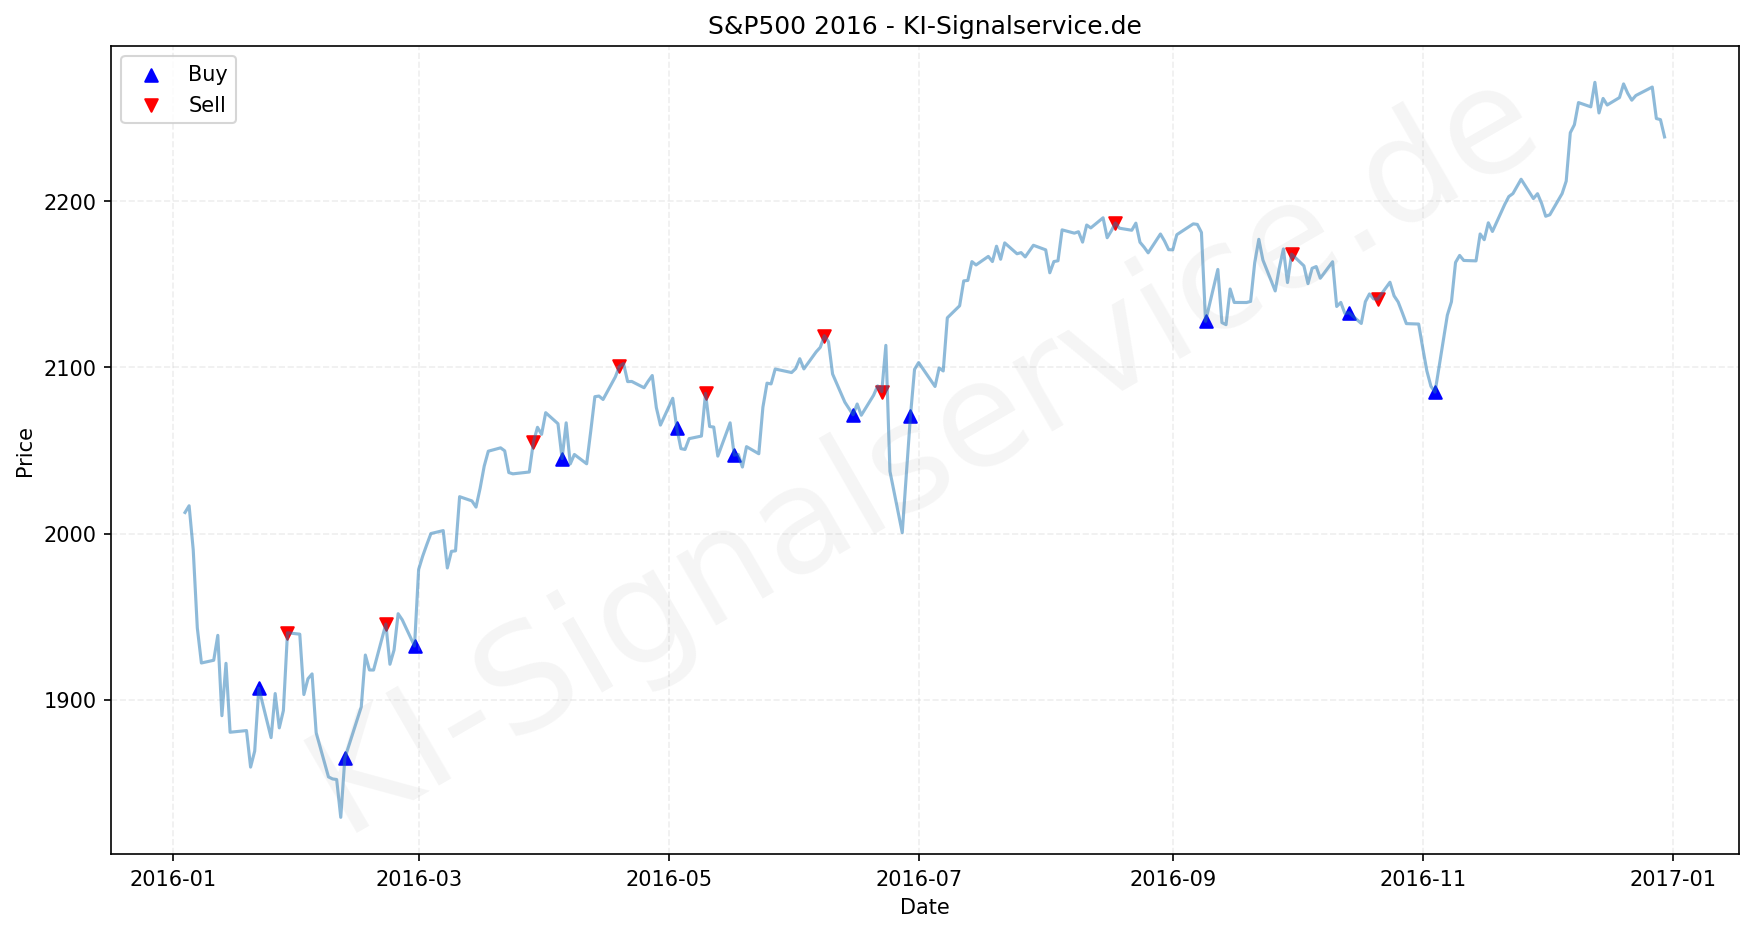 SP500 Index Performance Chart - KI Tradingsignale 2016